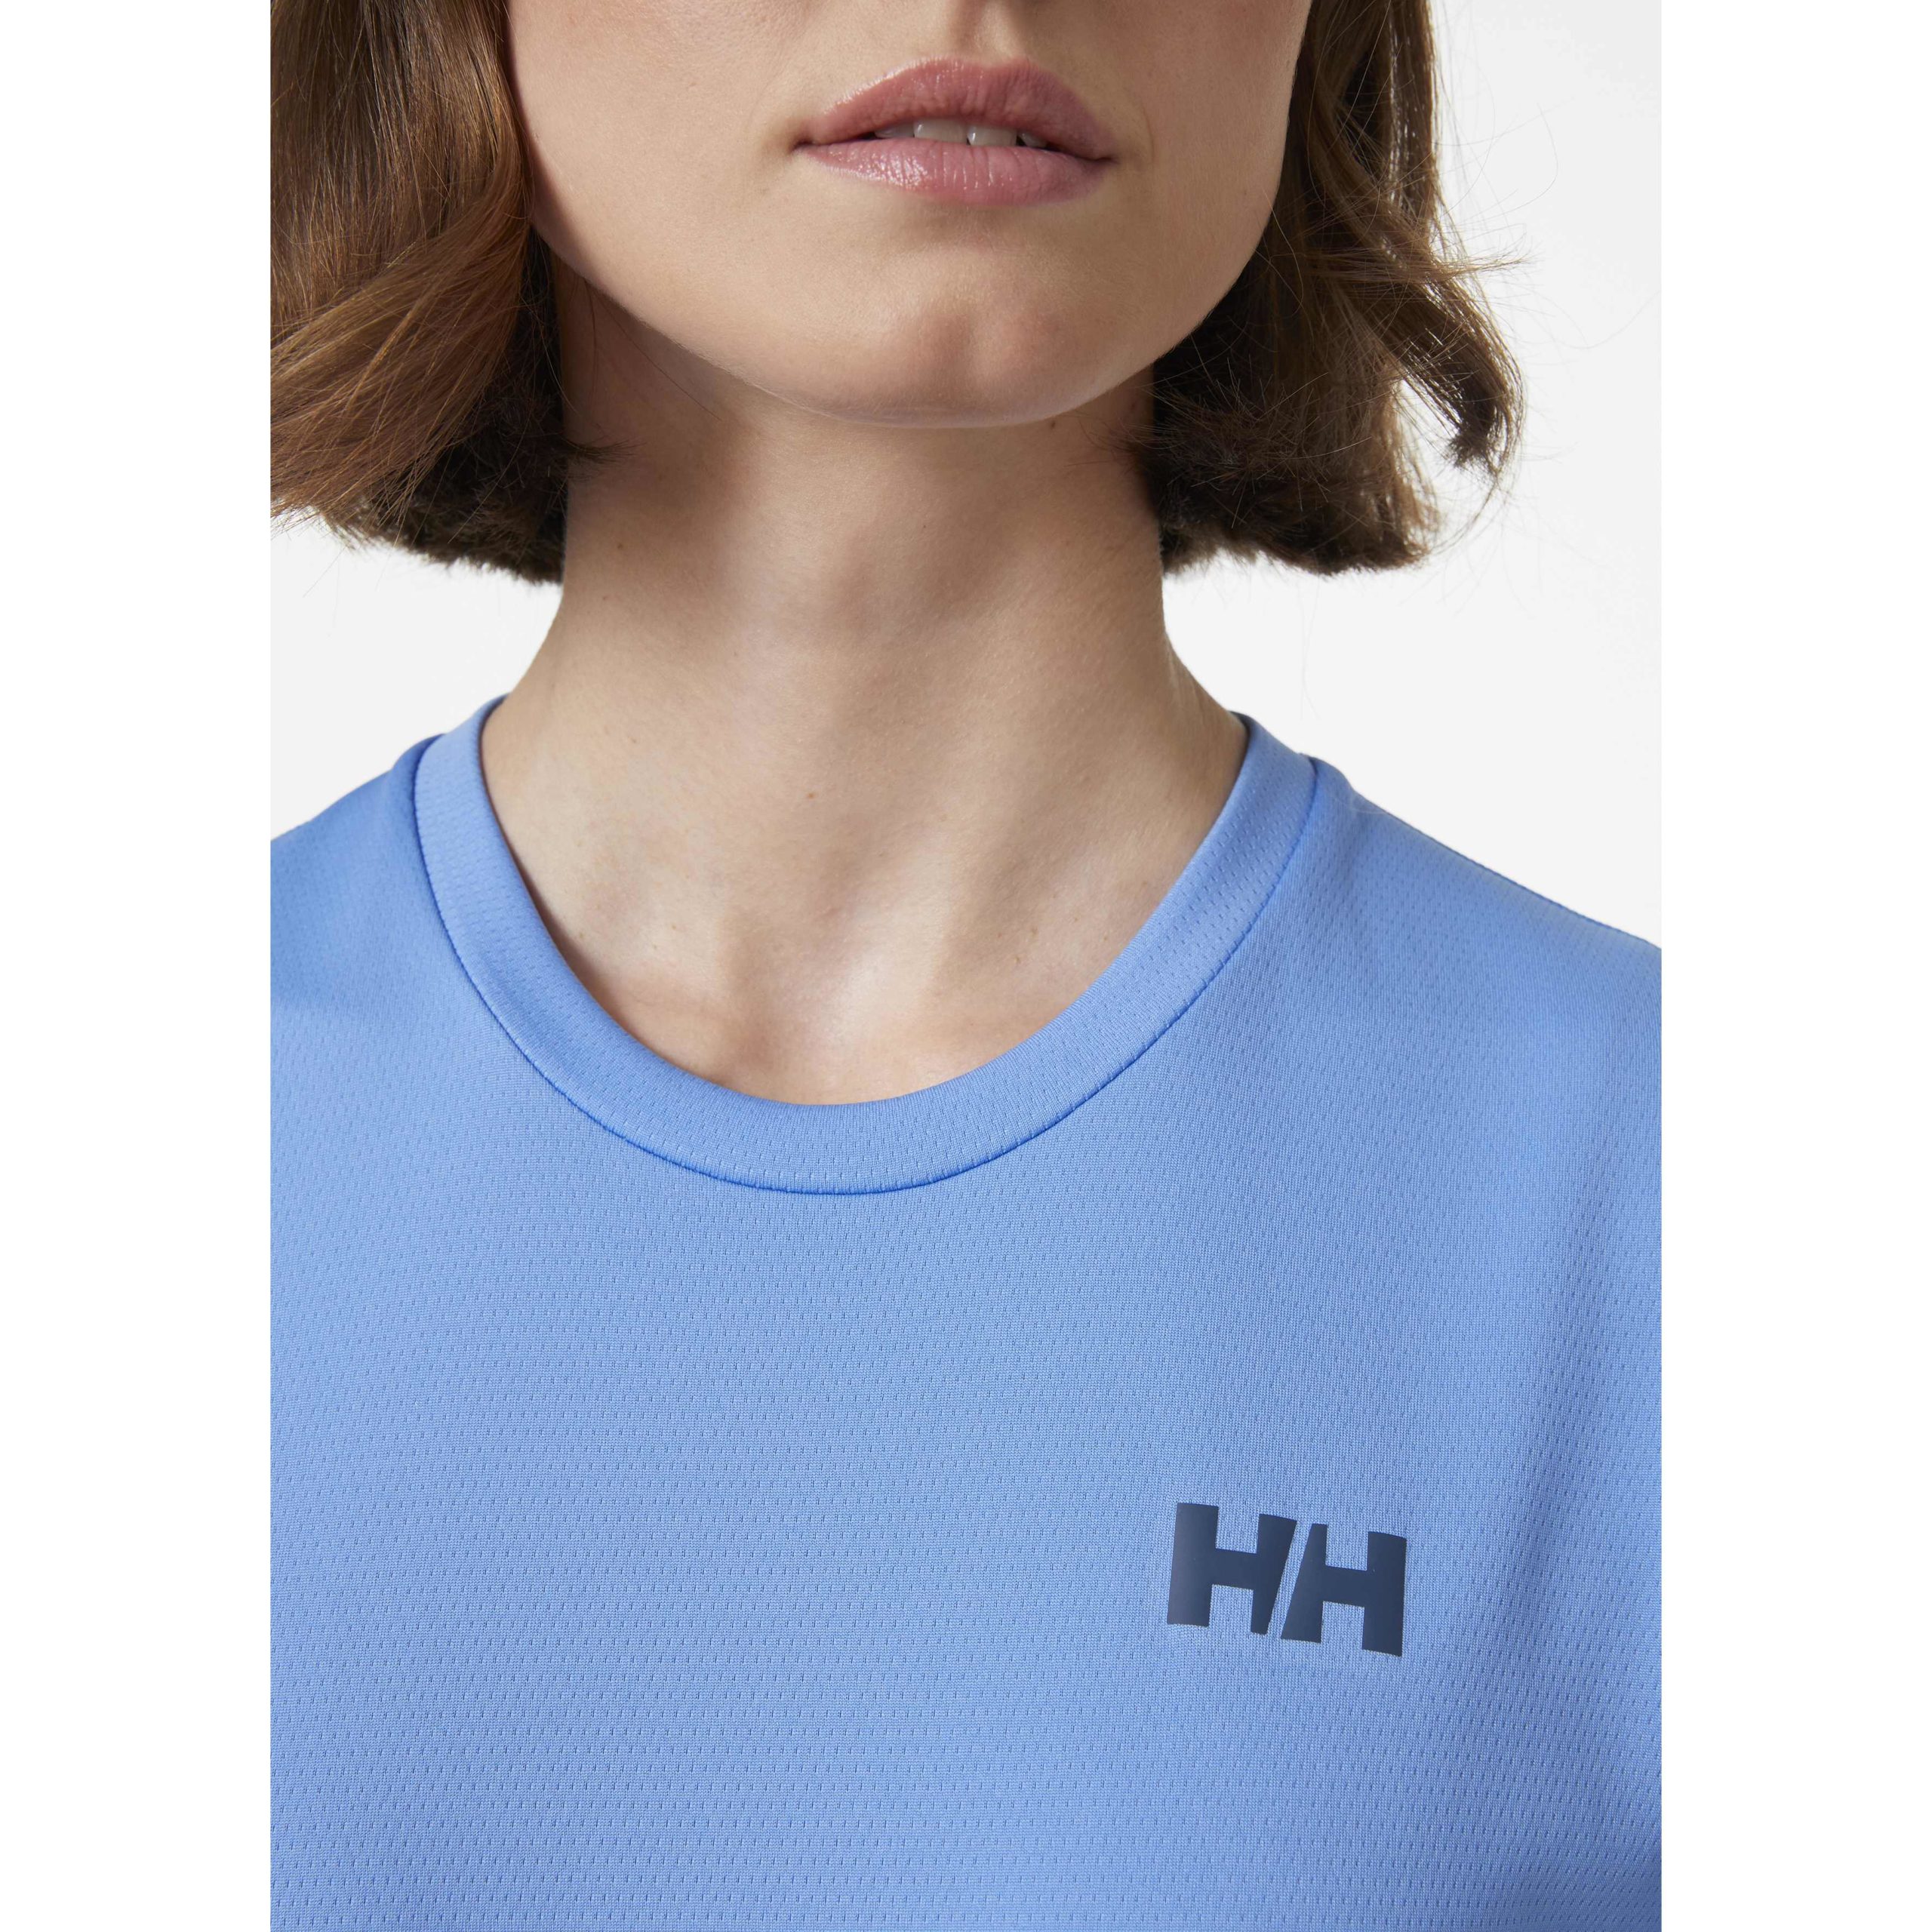 vrek Marine middernacht Helly Hansen Womens HH Lifa Active Solen T-shirt | Big Weather Gear | Helly  Hansen Newport